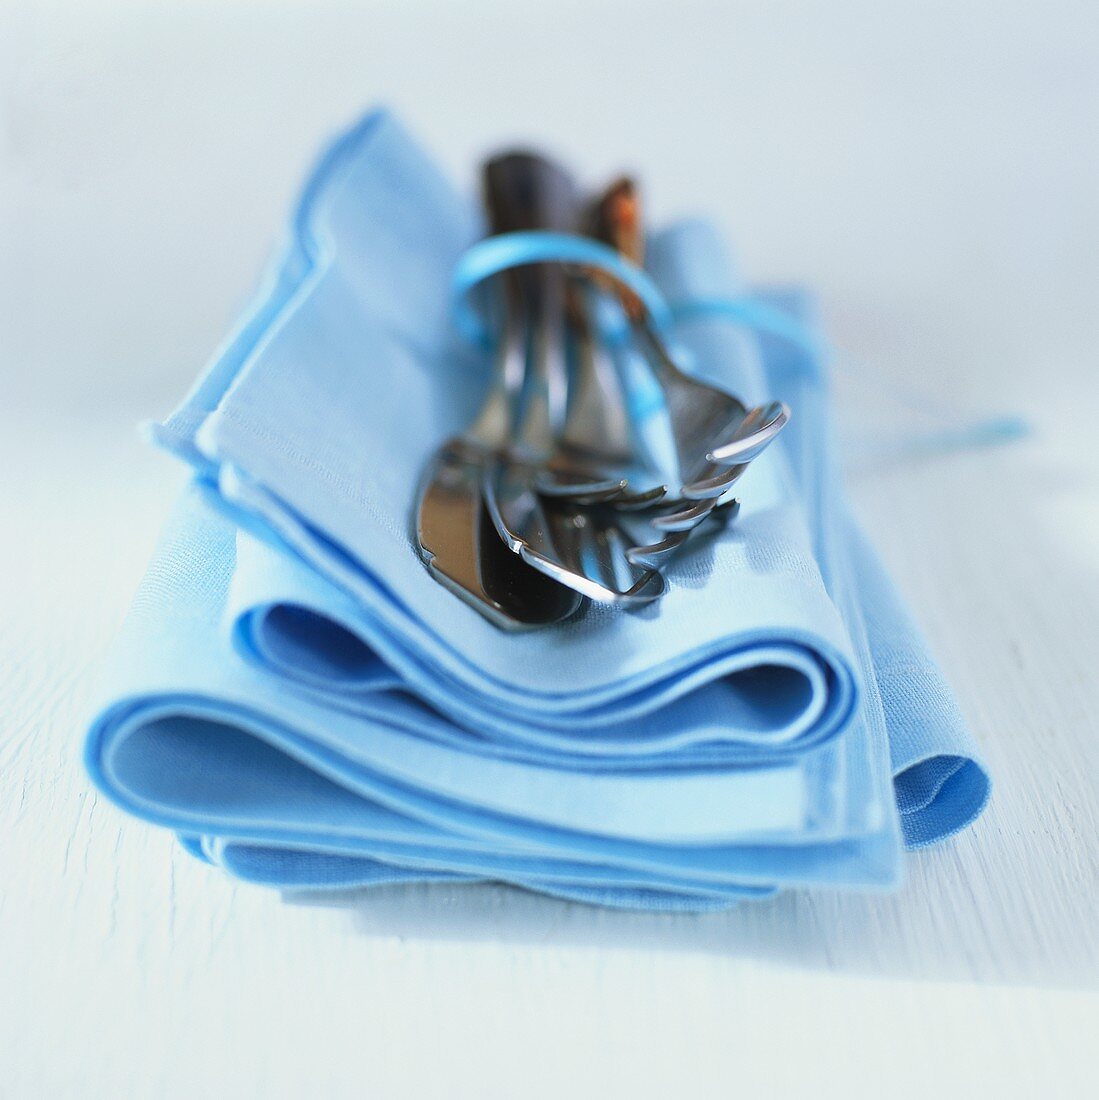 Cutlery on pale-blue fabric napkin